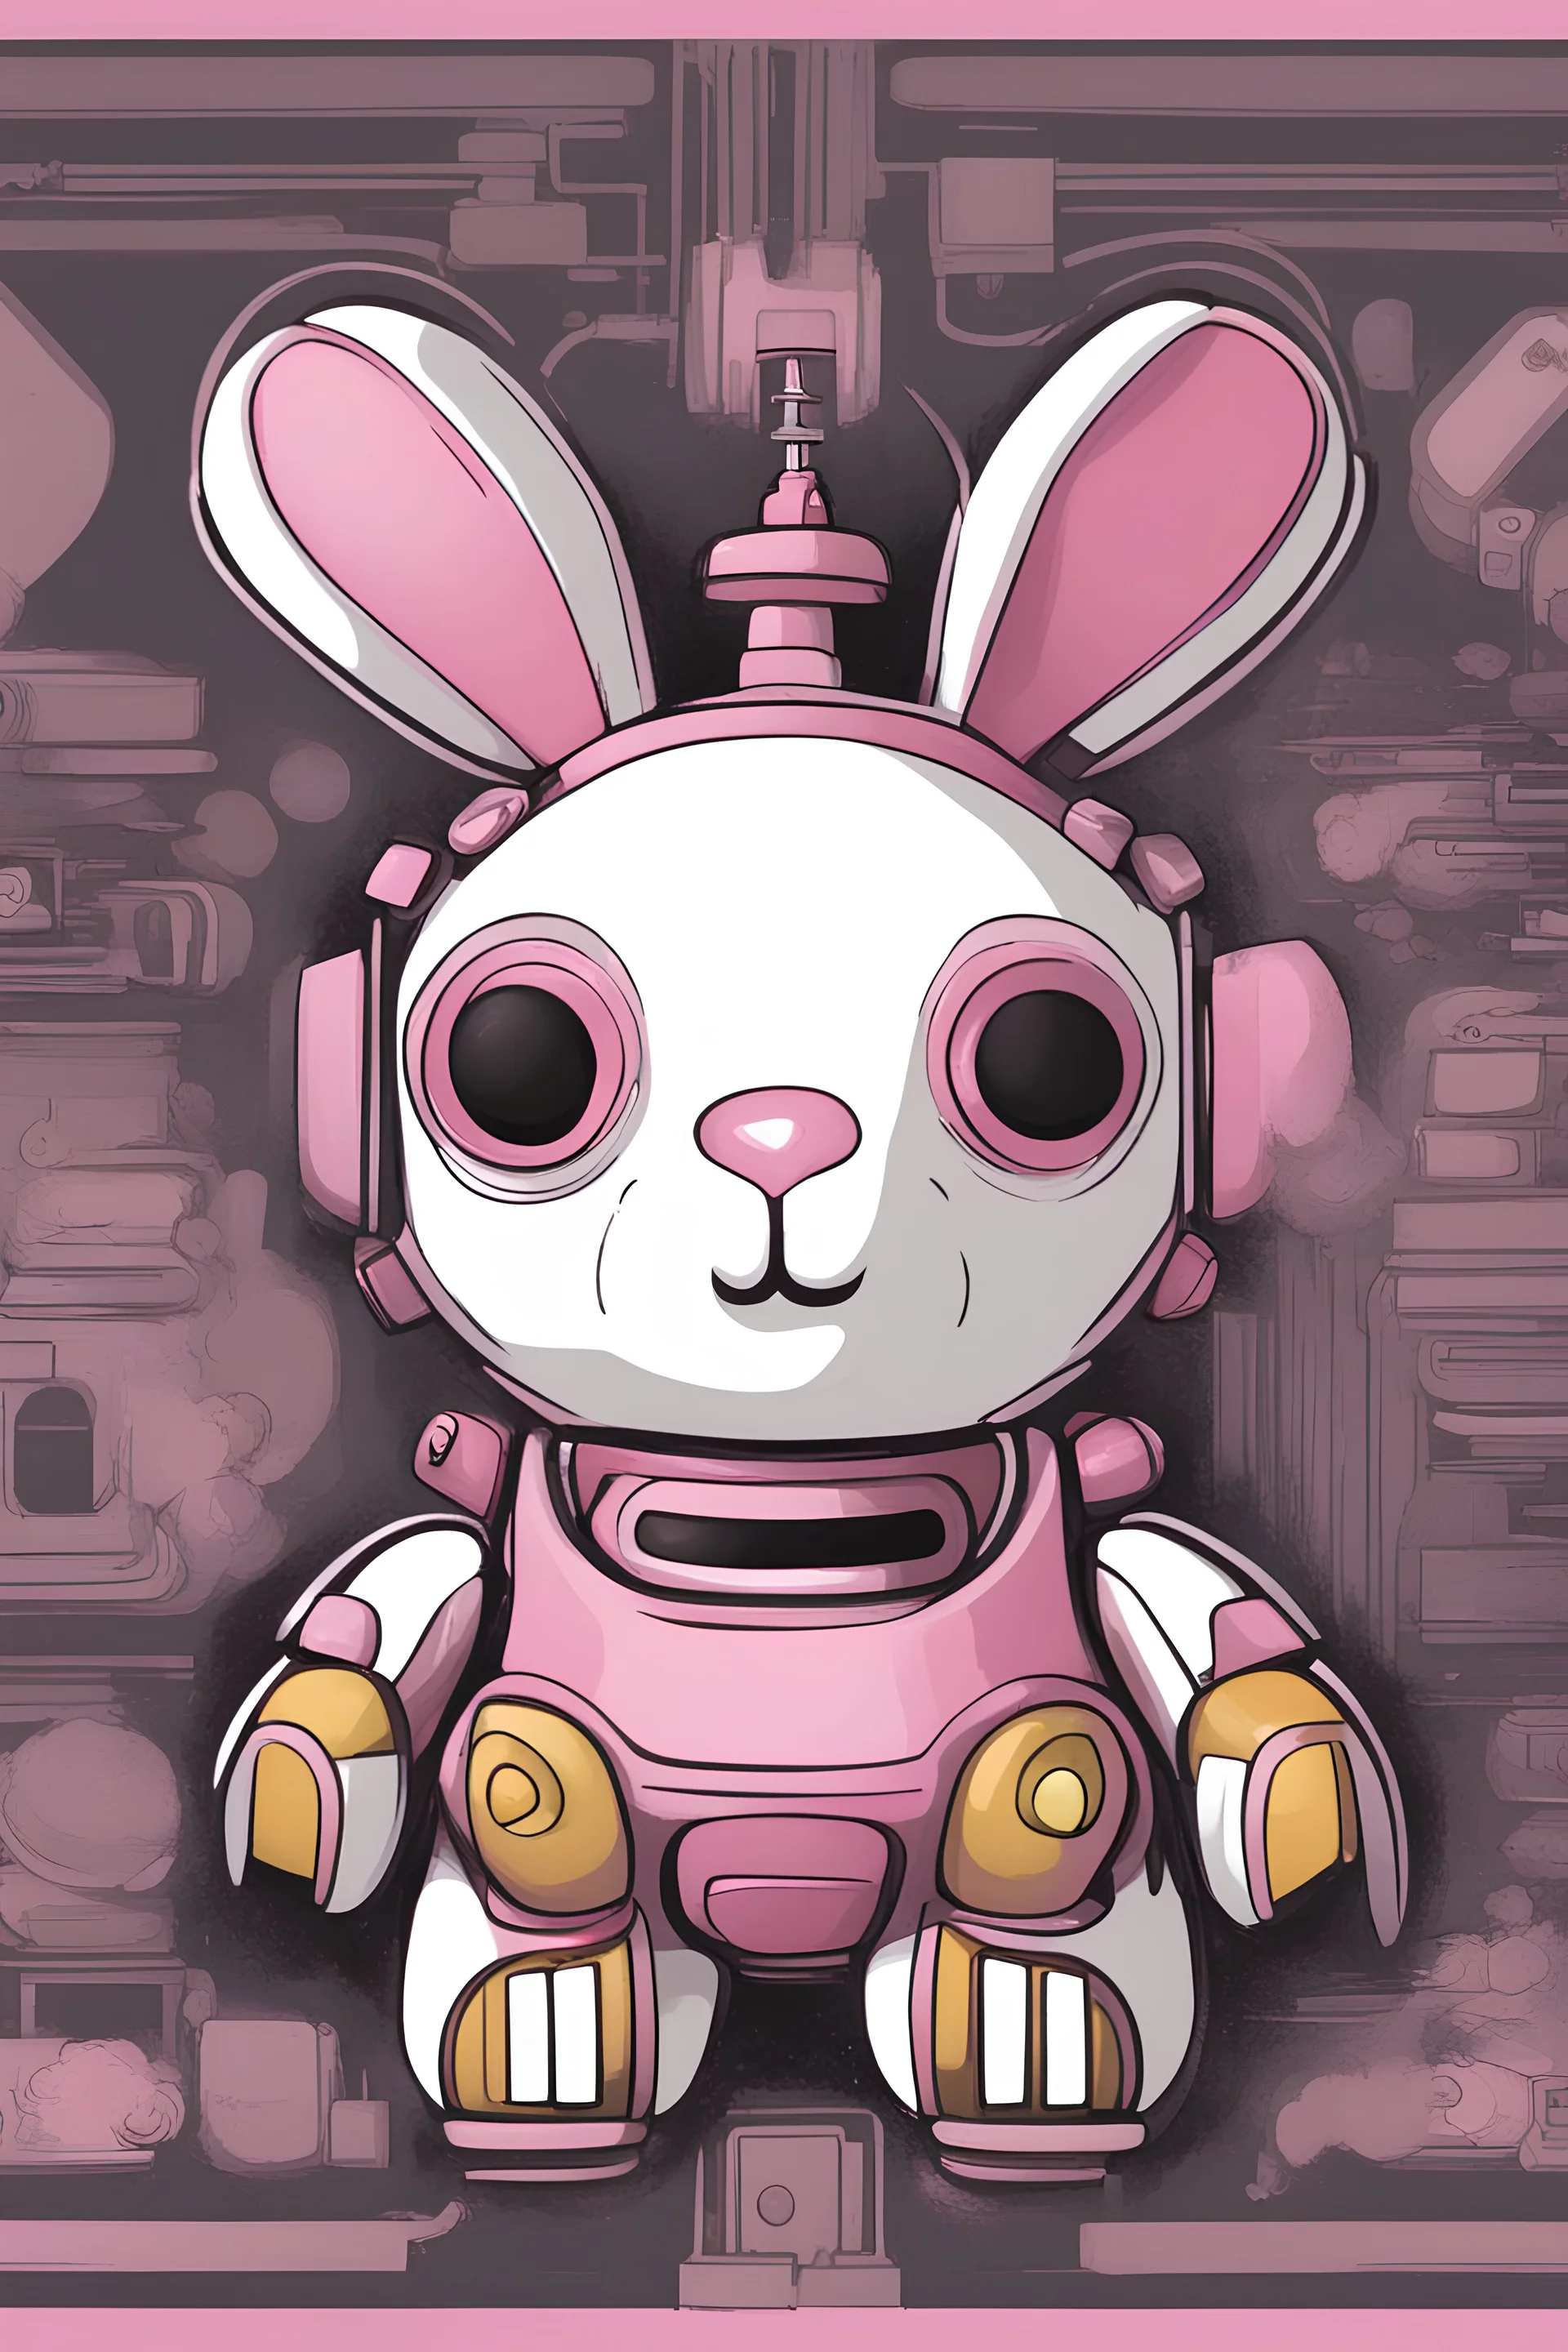 Pink Teddy bear bunny robot